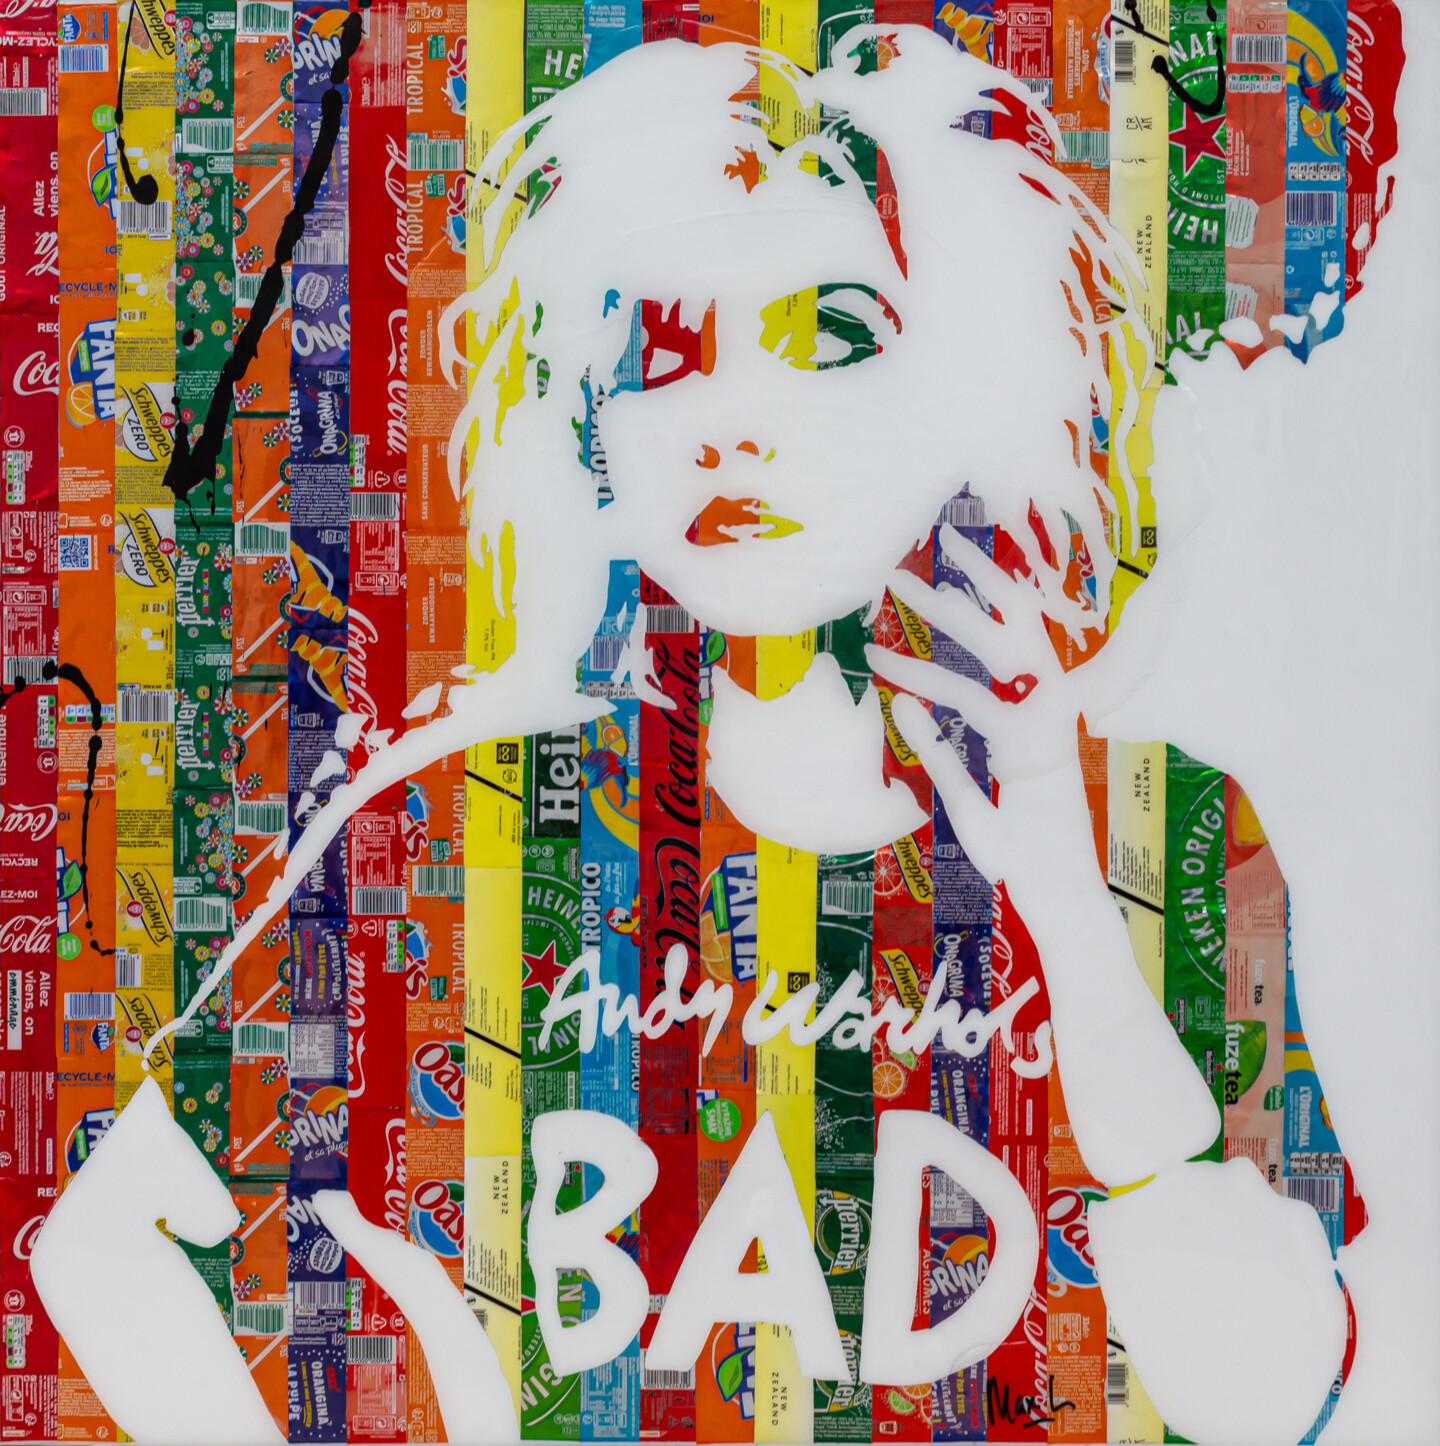 Maxl - Andy Warhol's Bad